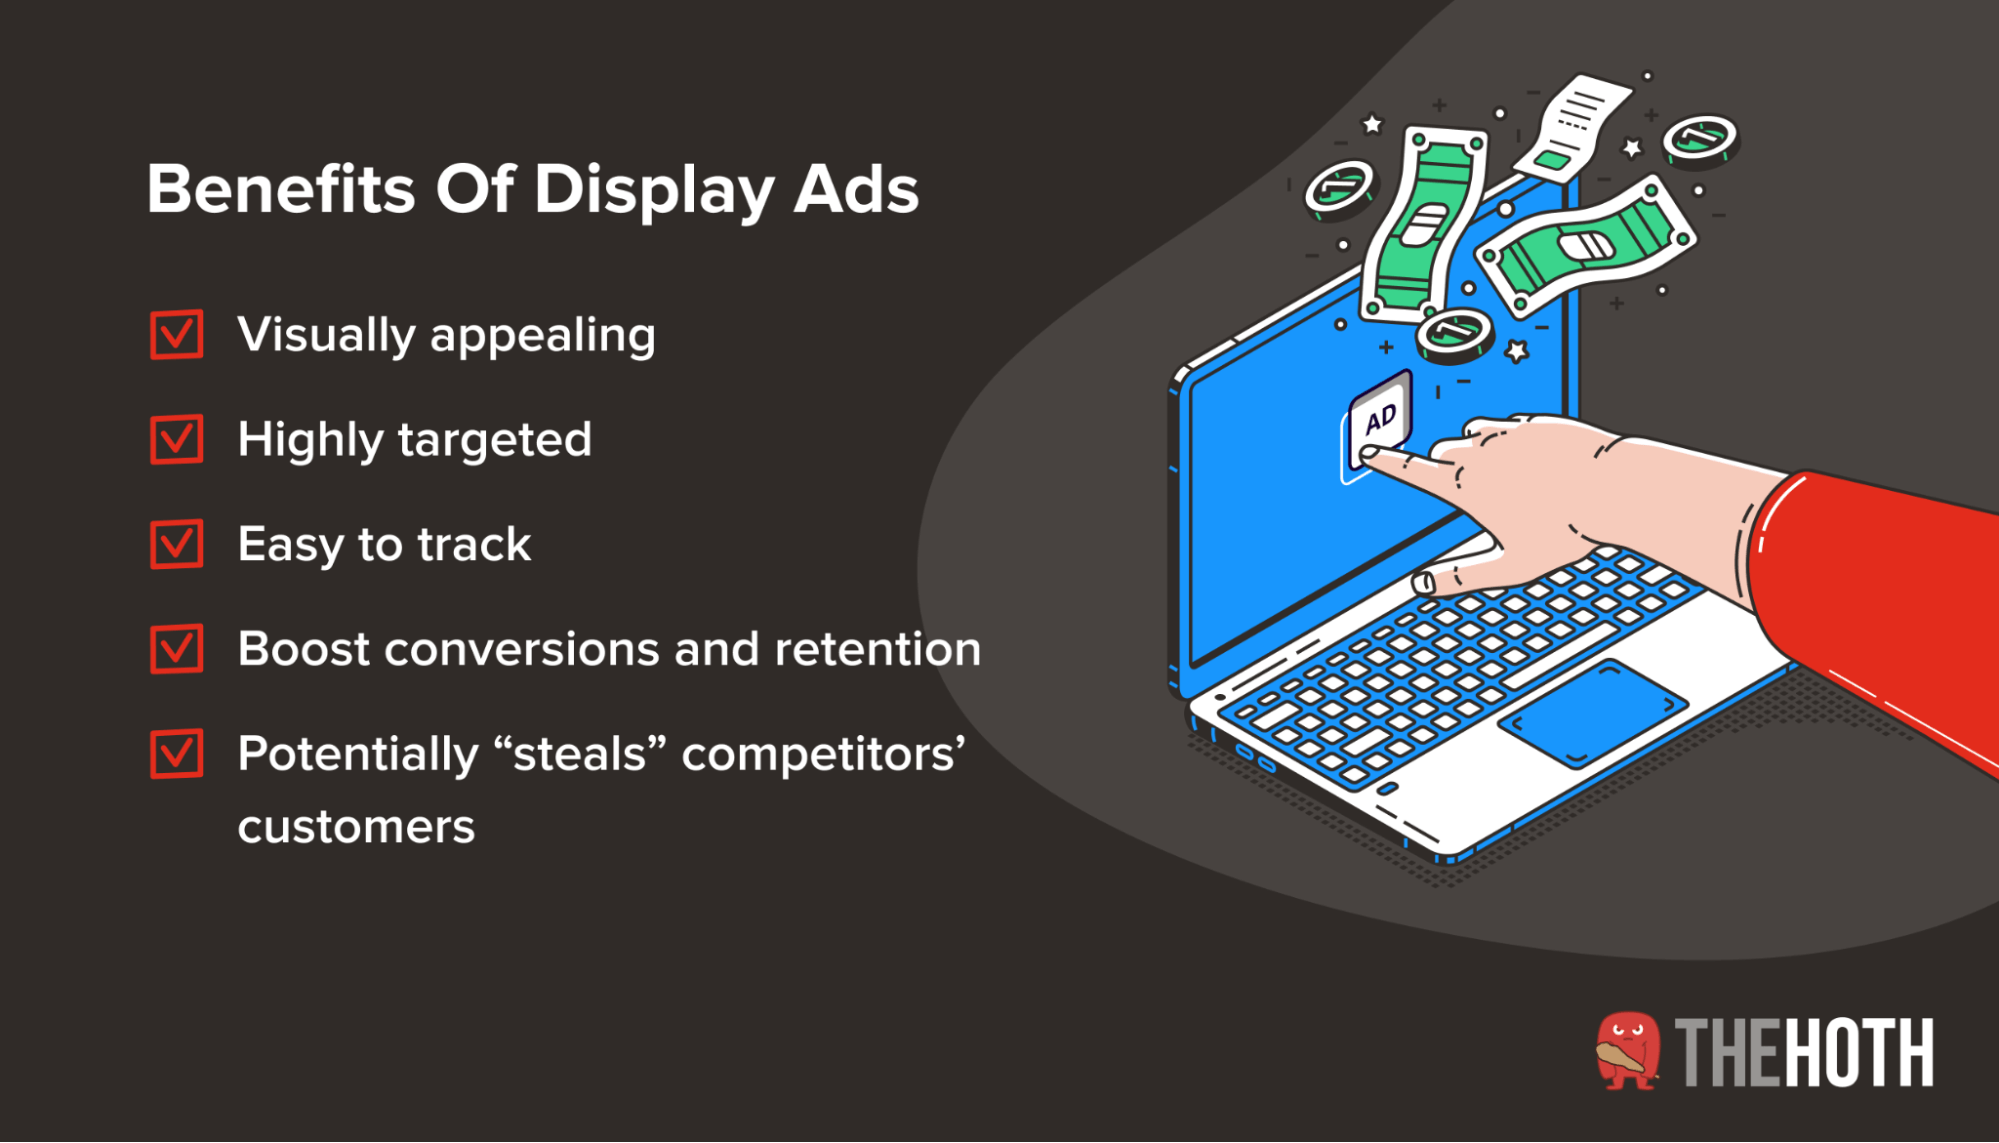 Benefits of display ads